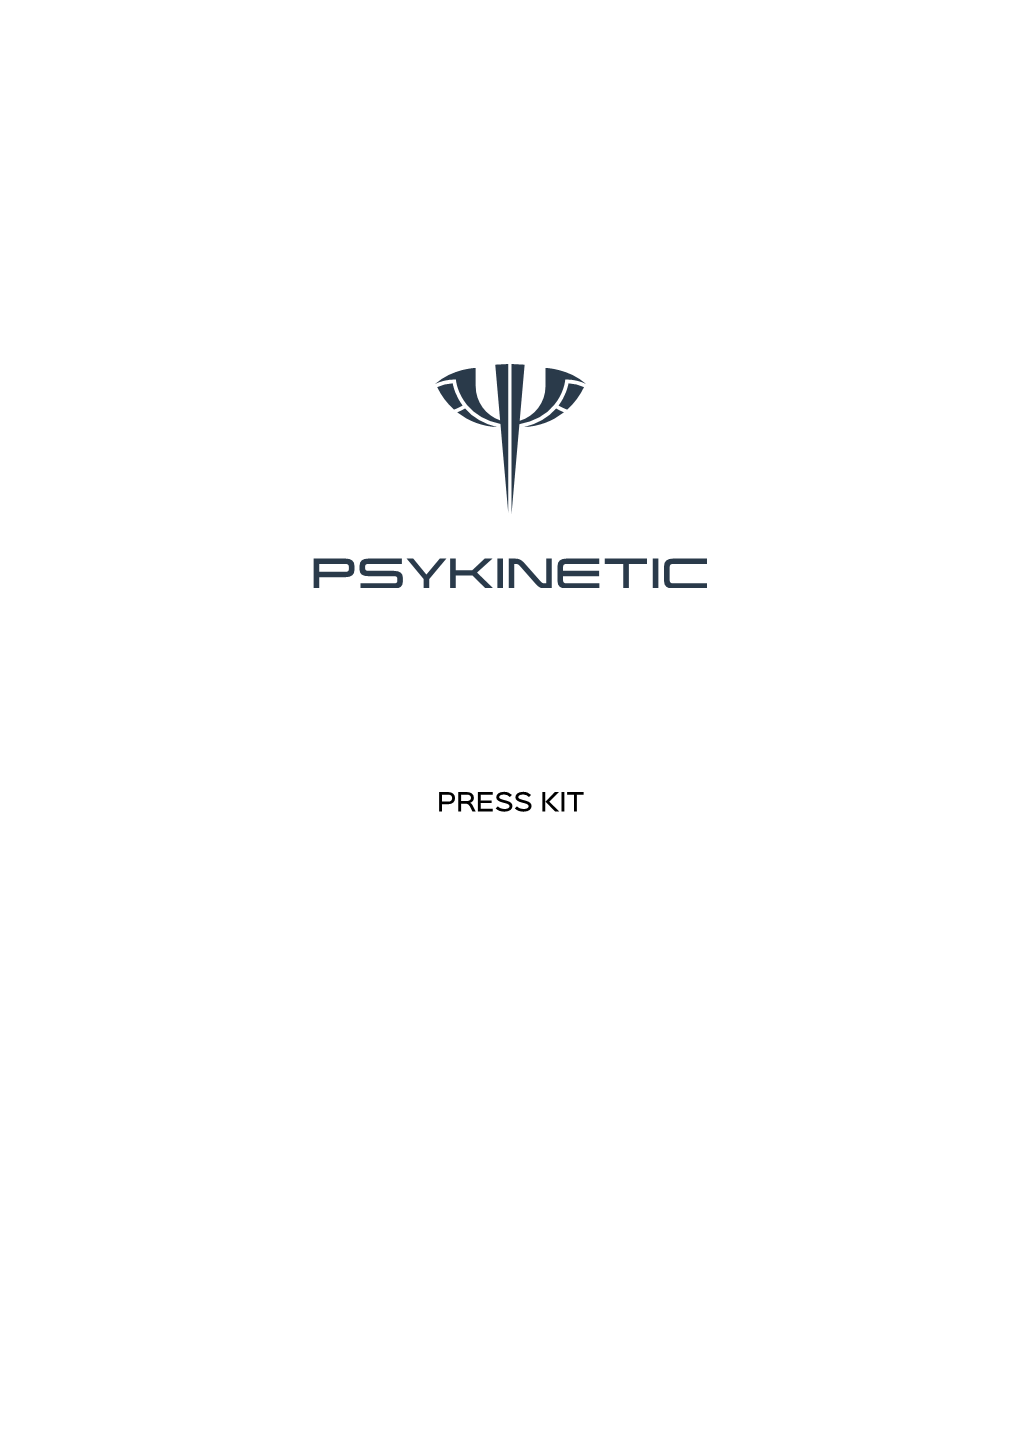 PRESS KIT Psykinetic Company Background